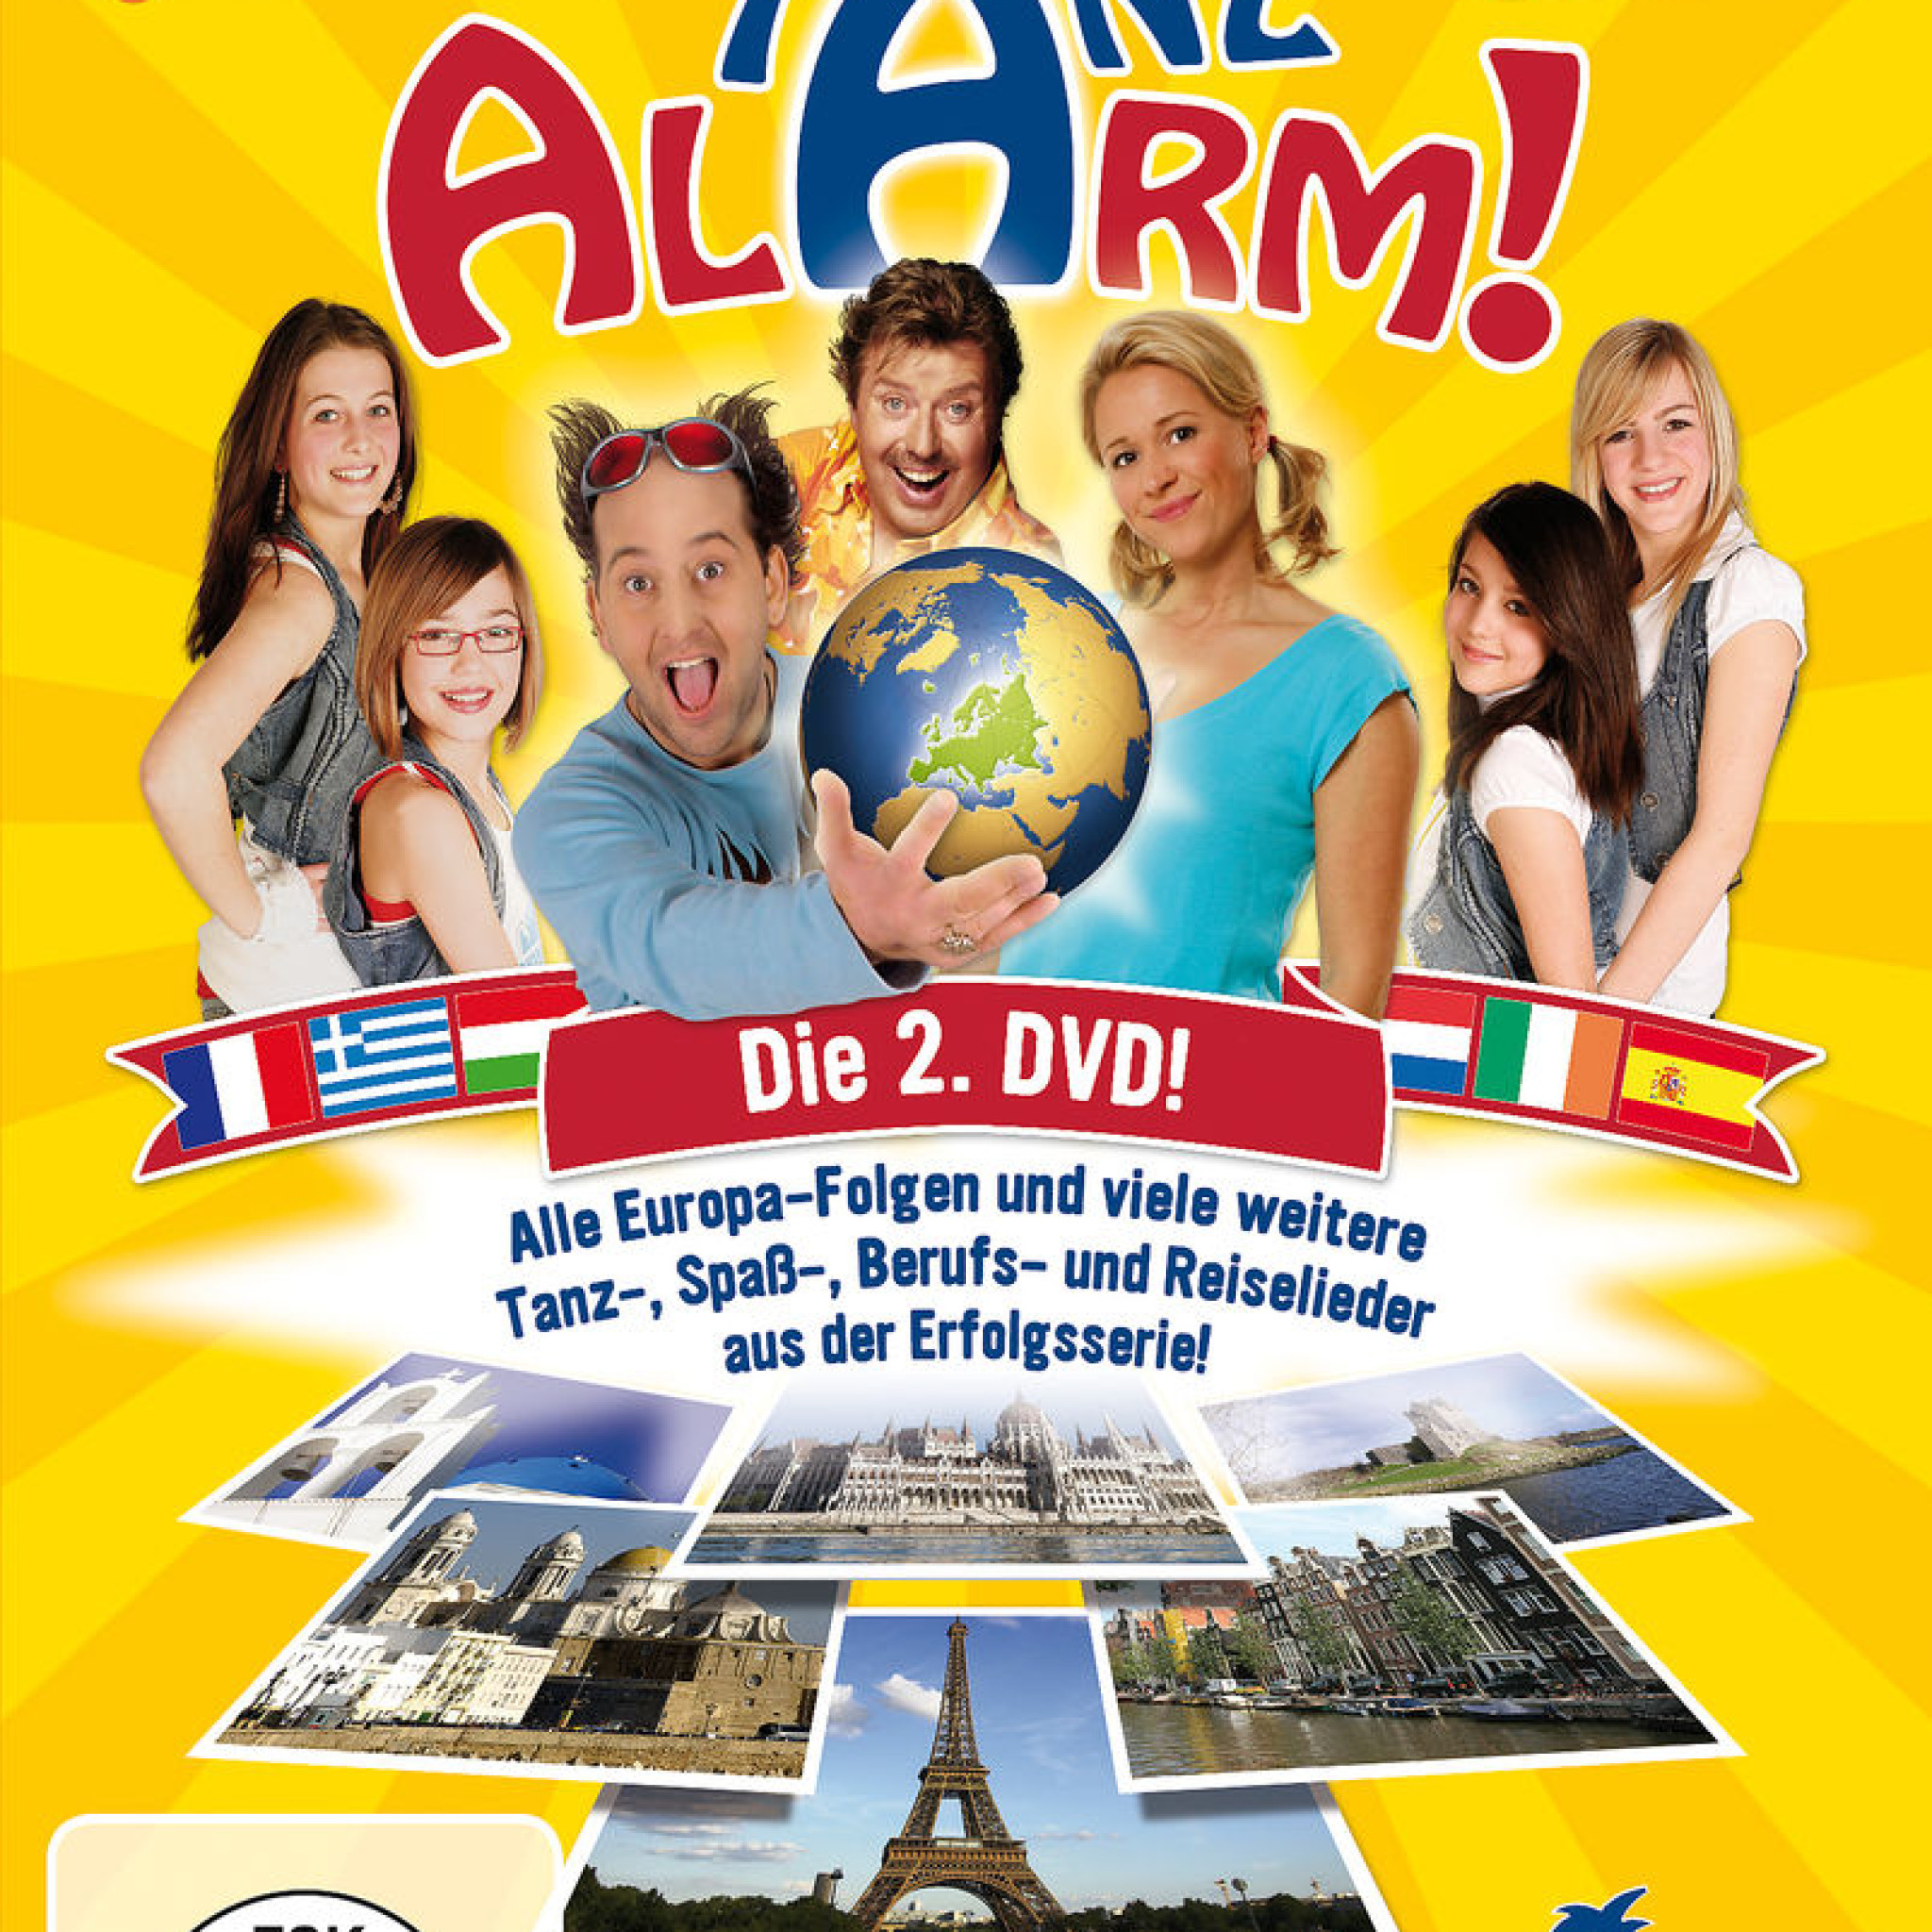 KI.KA Tanzalarm! Die 2.DVD! (Europatour u.v.m.): Lehel, Tom / Rosin, Volker / TanzalarmKids